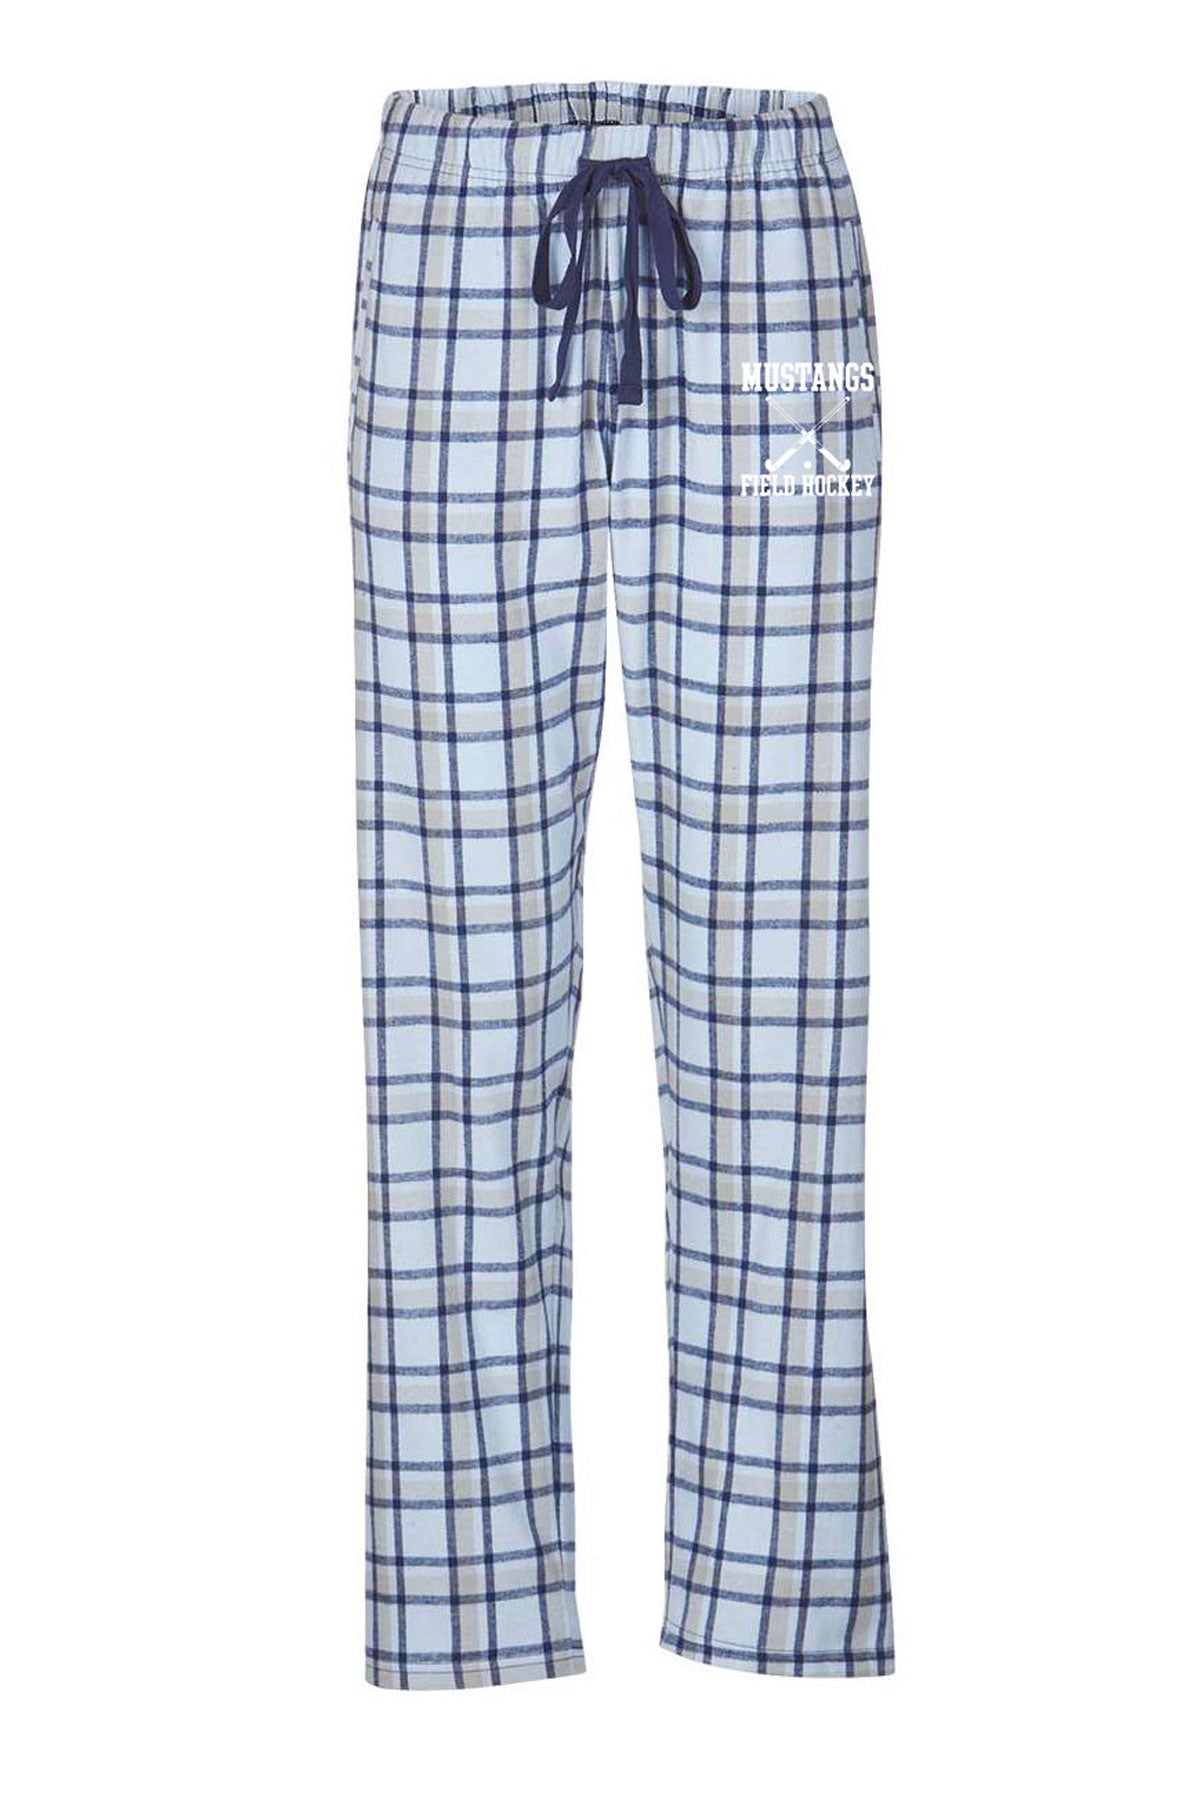 Flannel Pajama Pants - White/blue plaid - Ladies